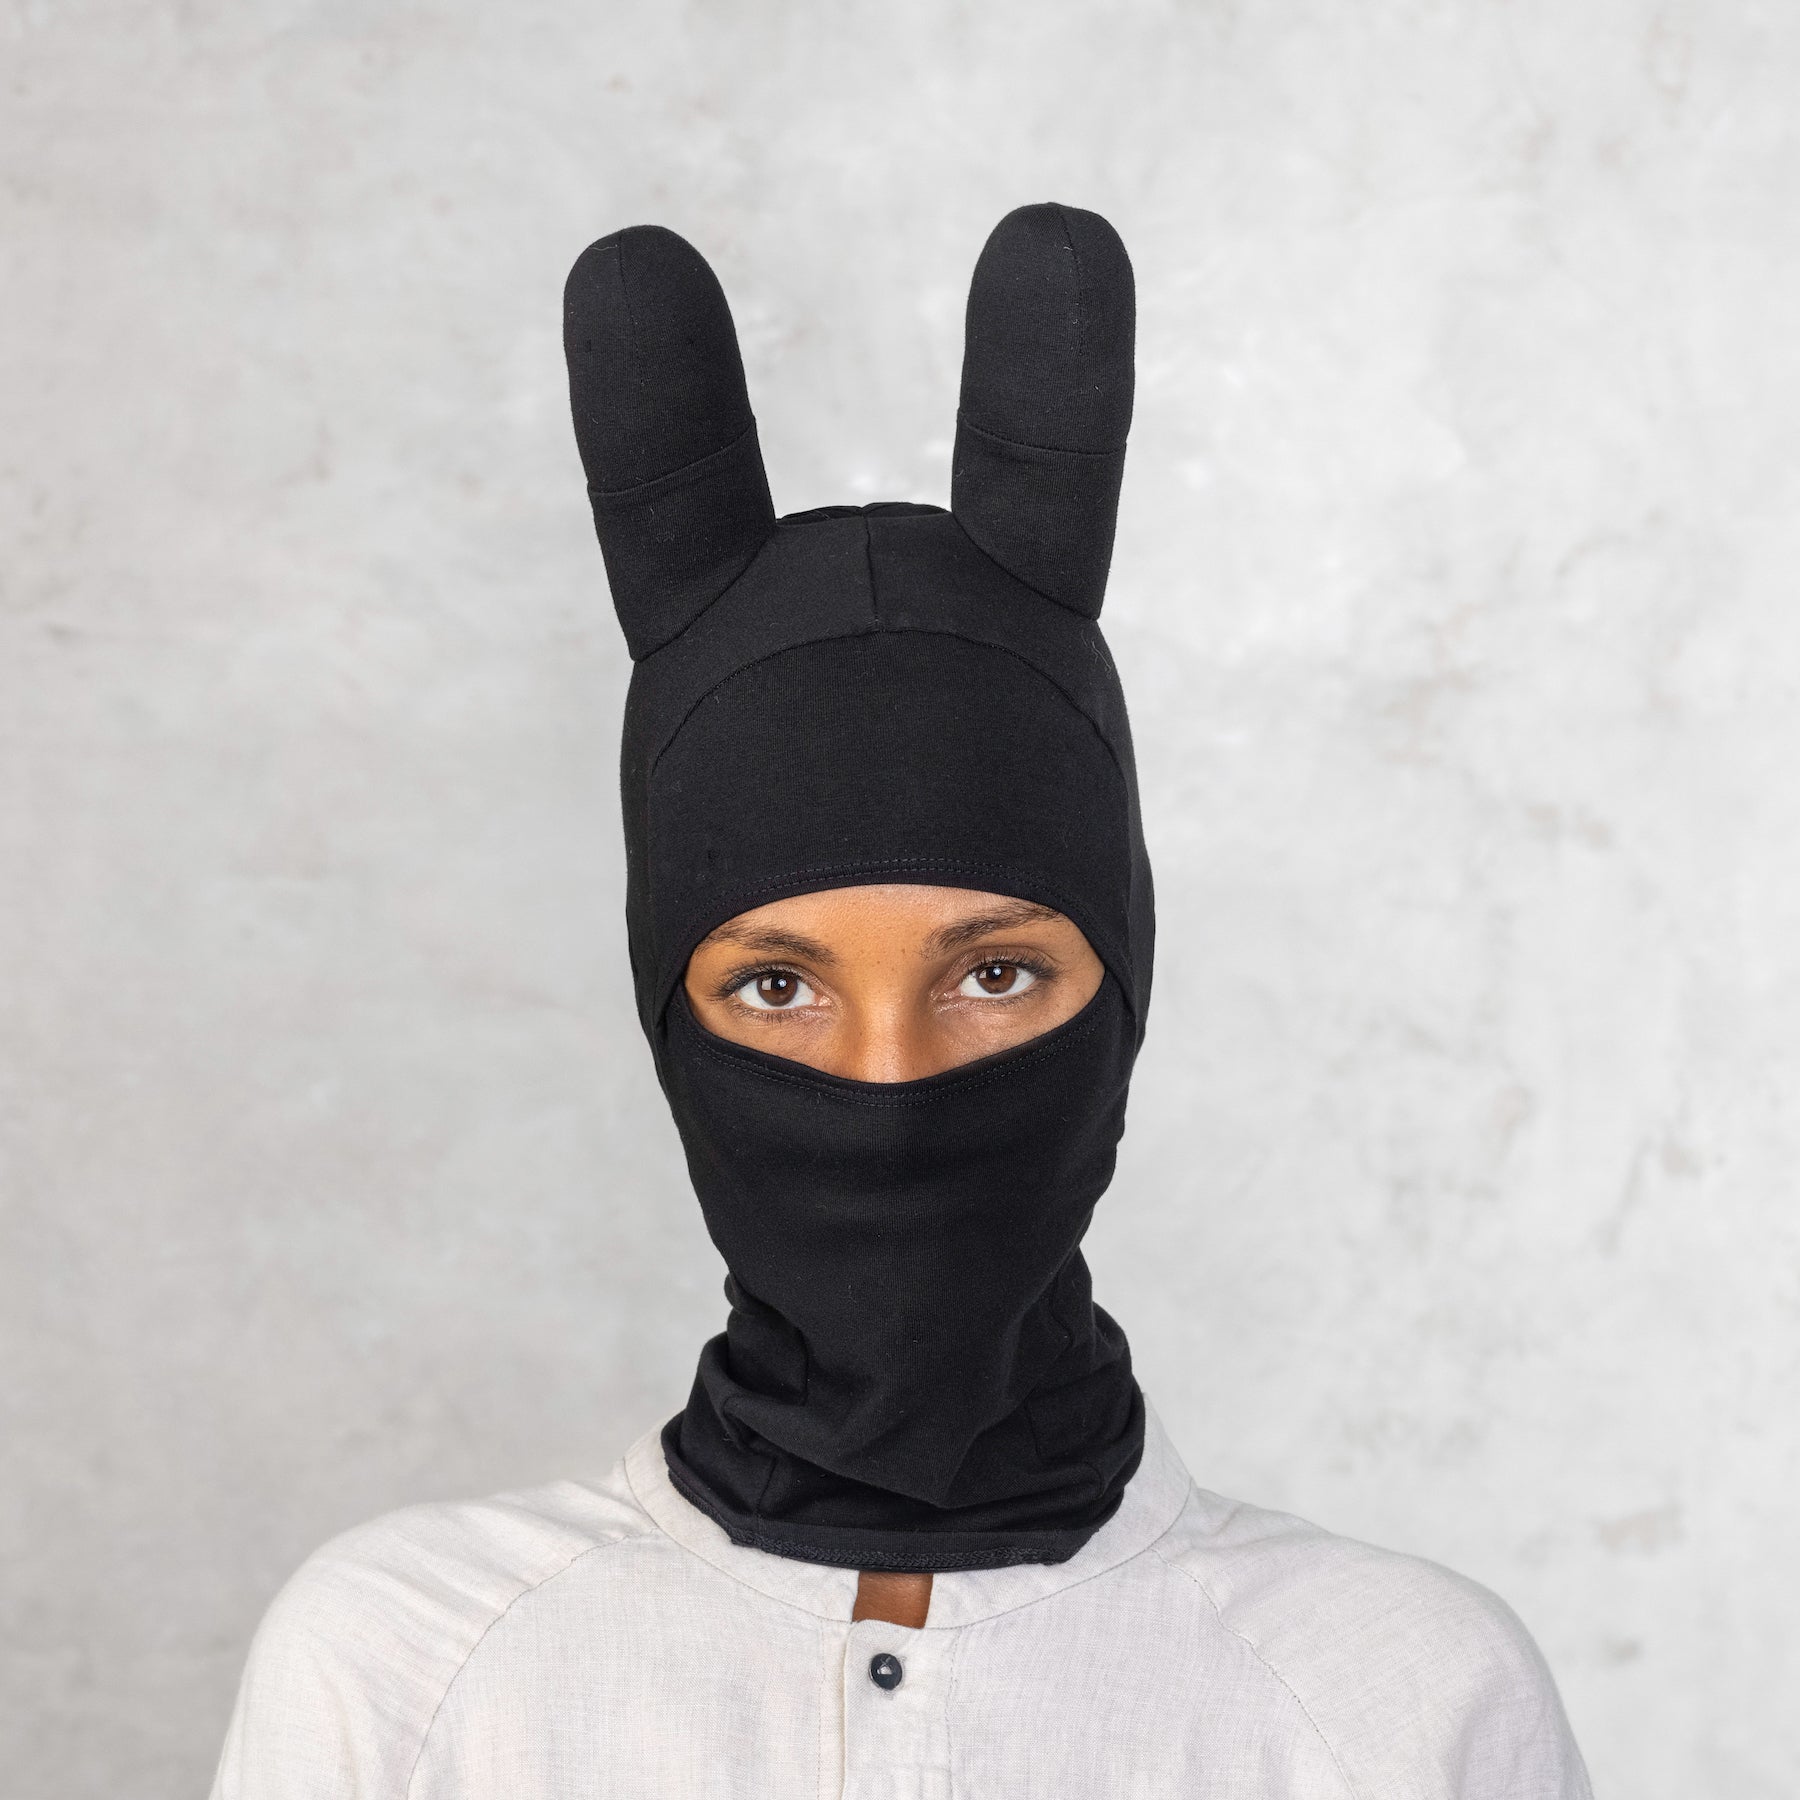 Adult Black Bunny Mask